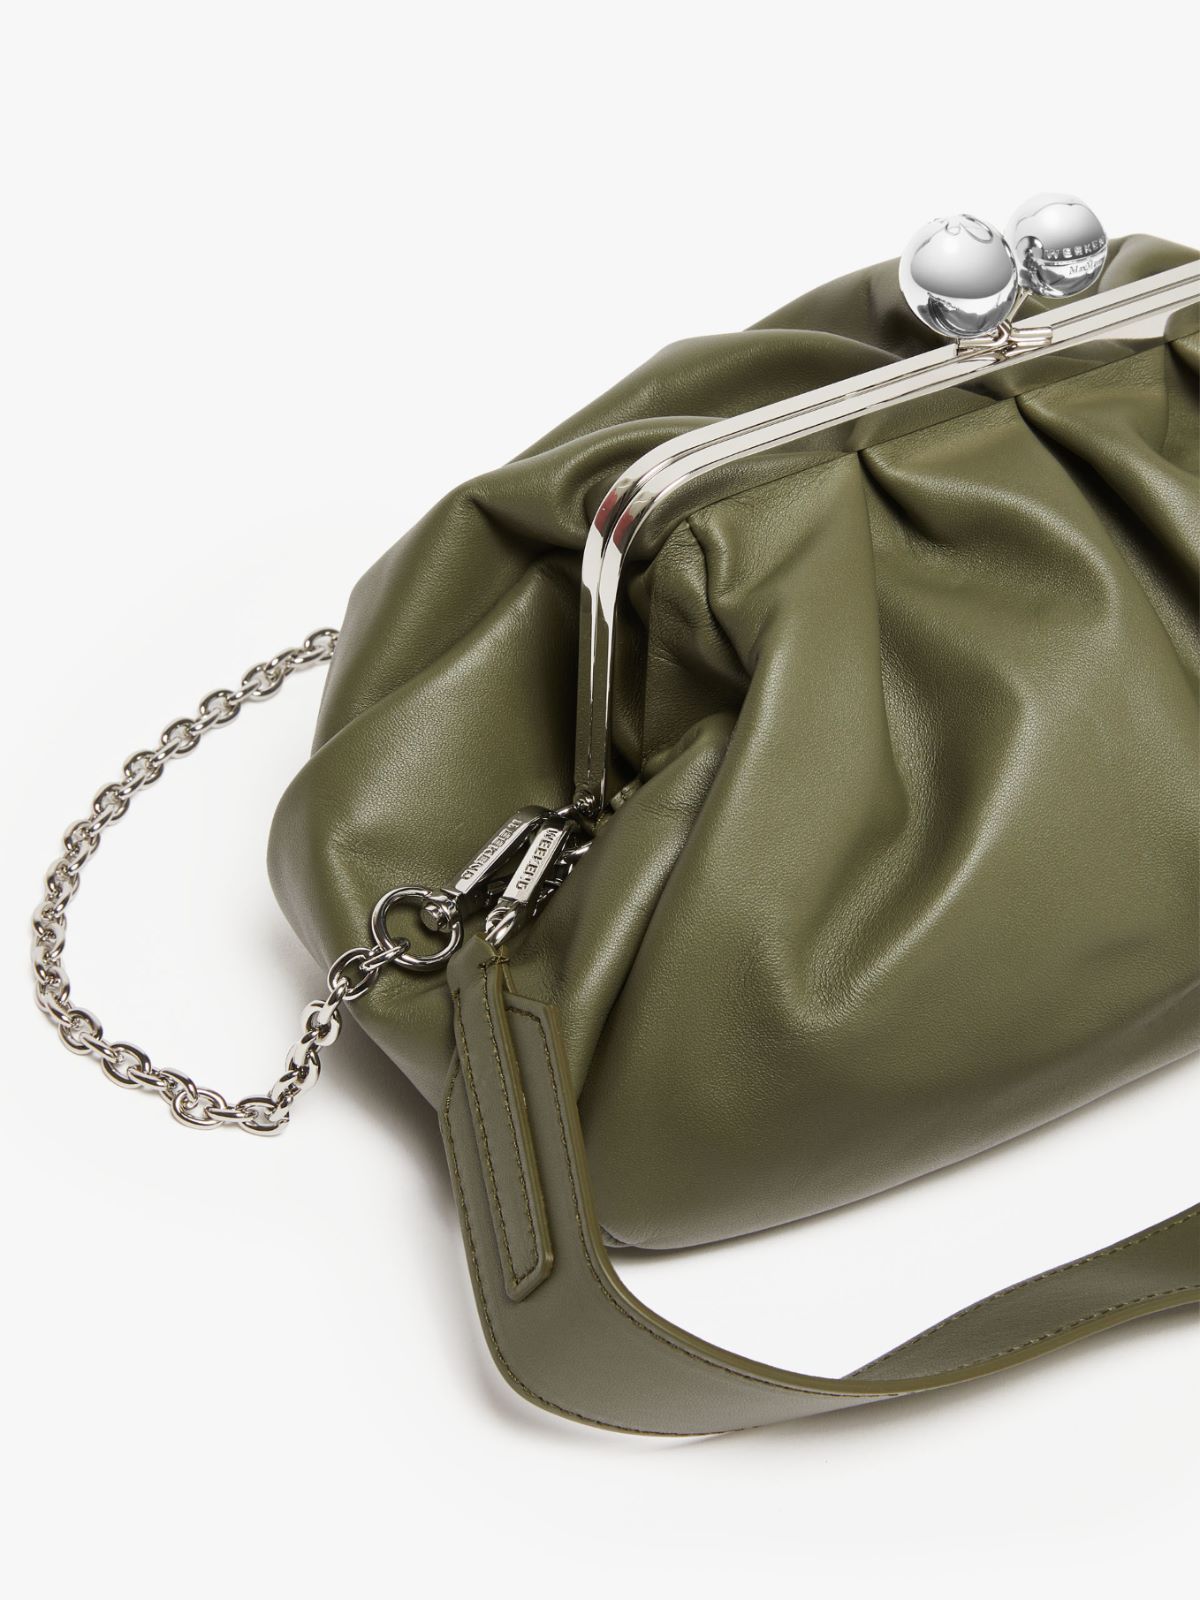 Medium Pasticcino Bag in nappa leather - KAKI - Weekend Max Mara - 4